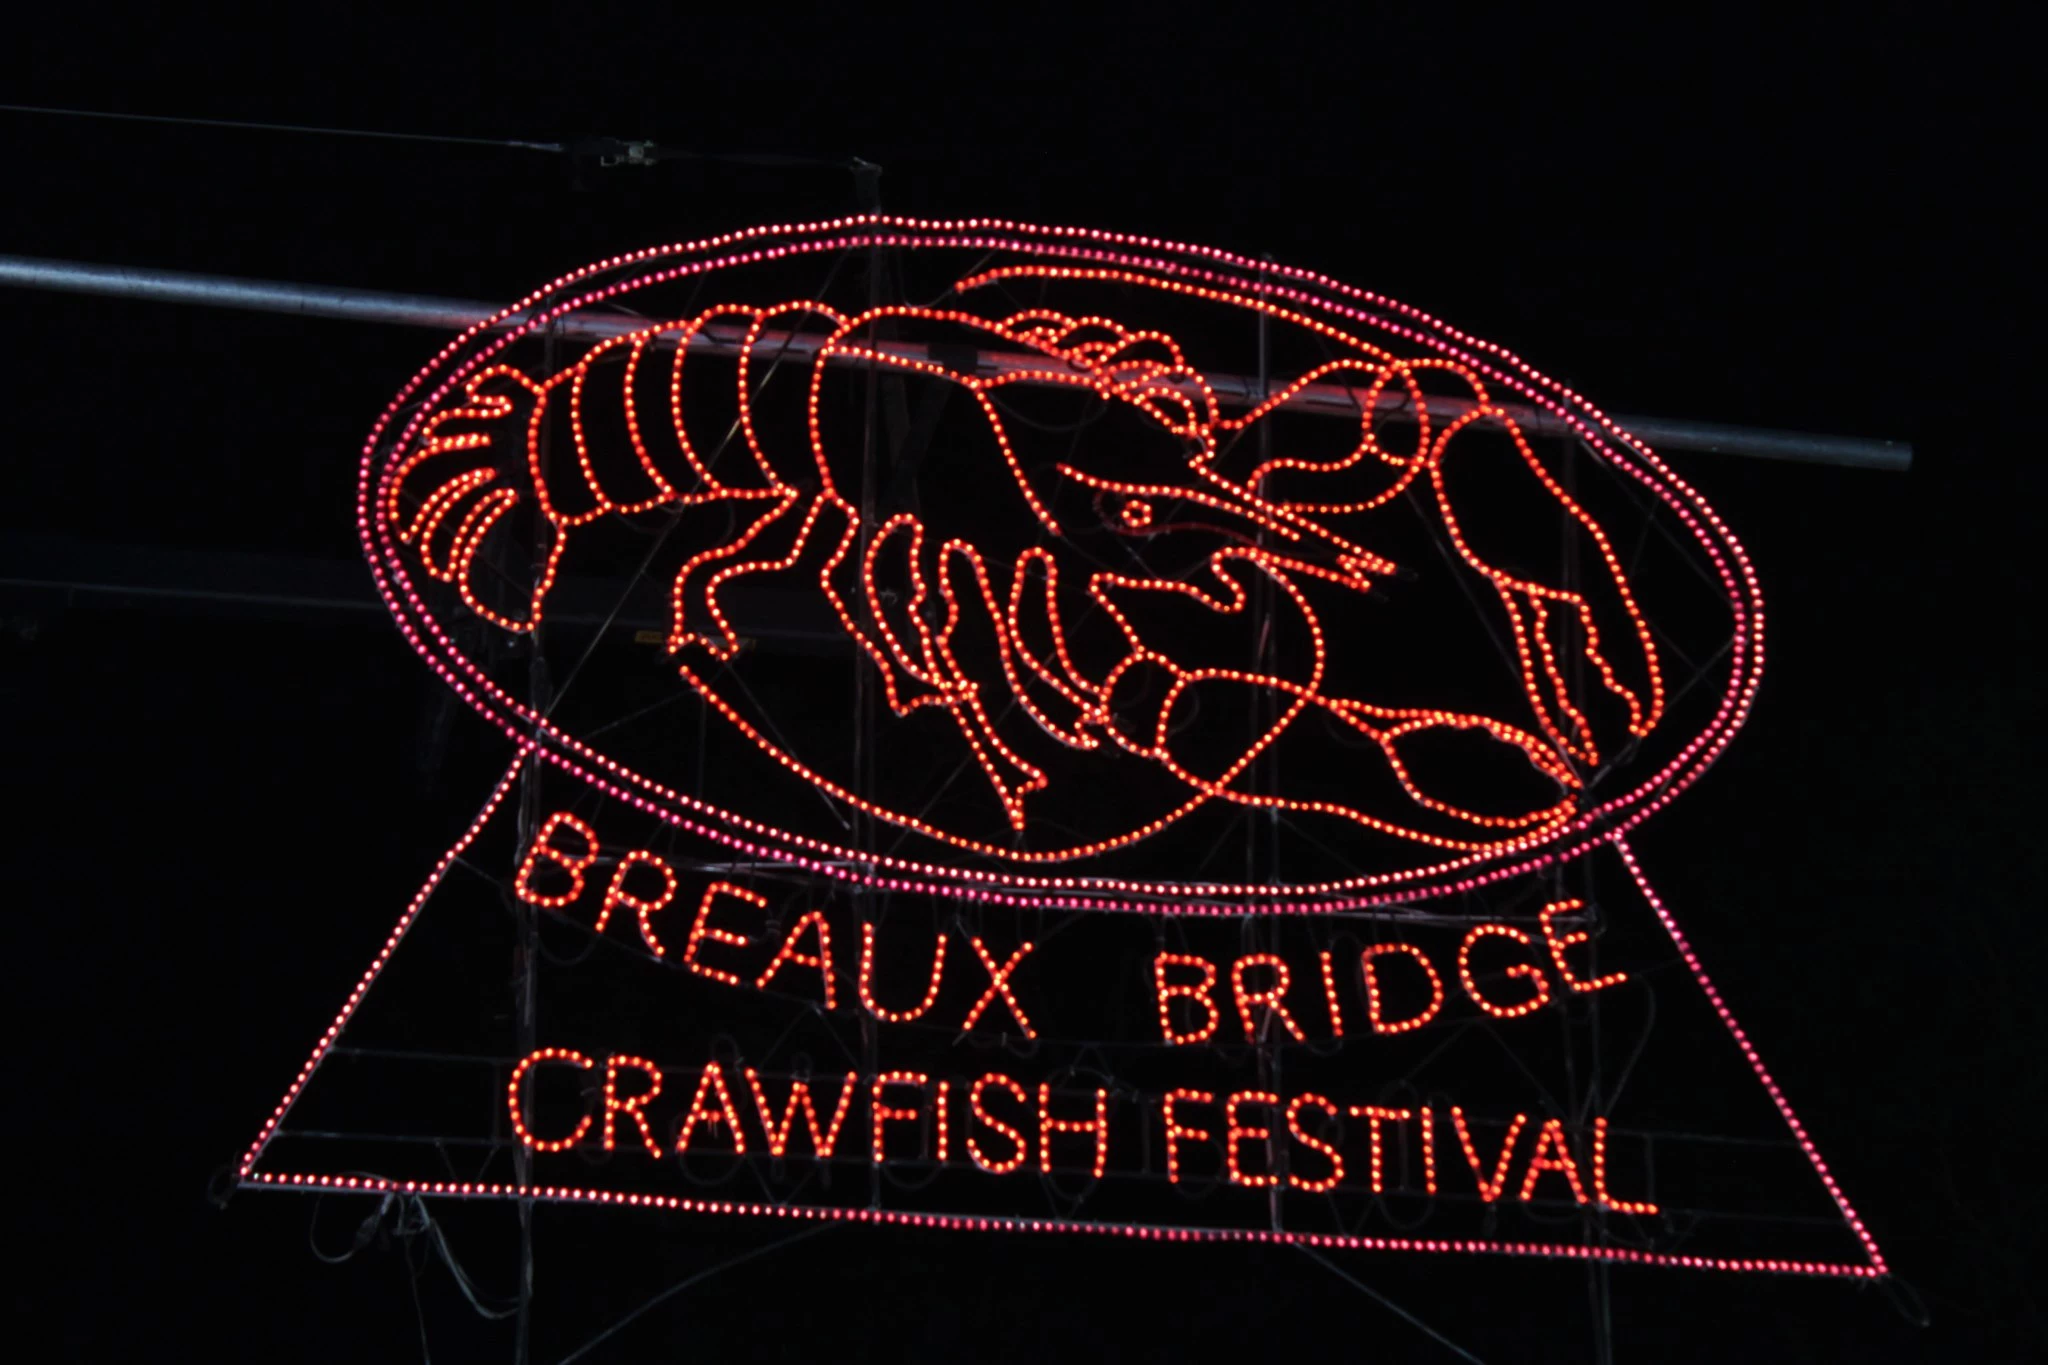 crawfish festival breaux bridge 2021